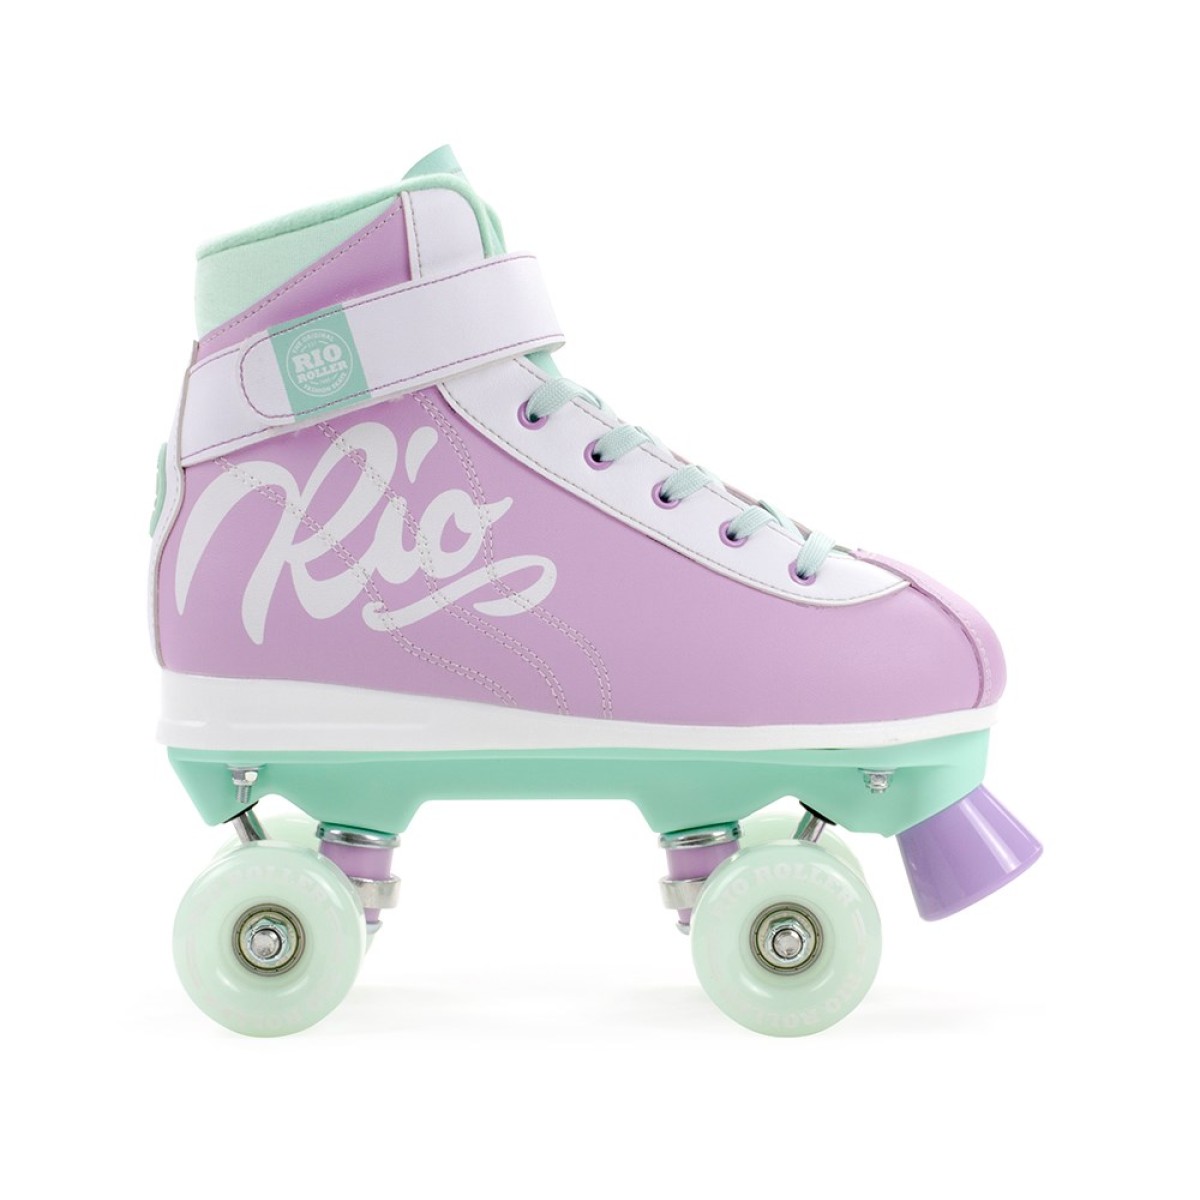 Quad skates Rio Roller Milkshake  RIO ROLLER - view 3